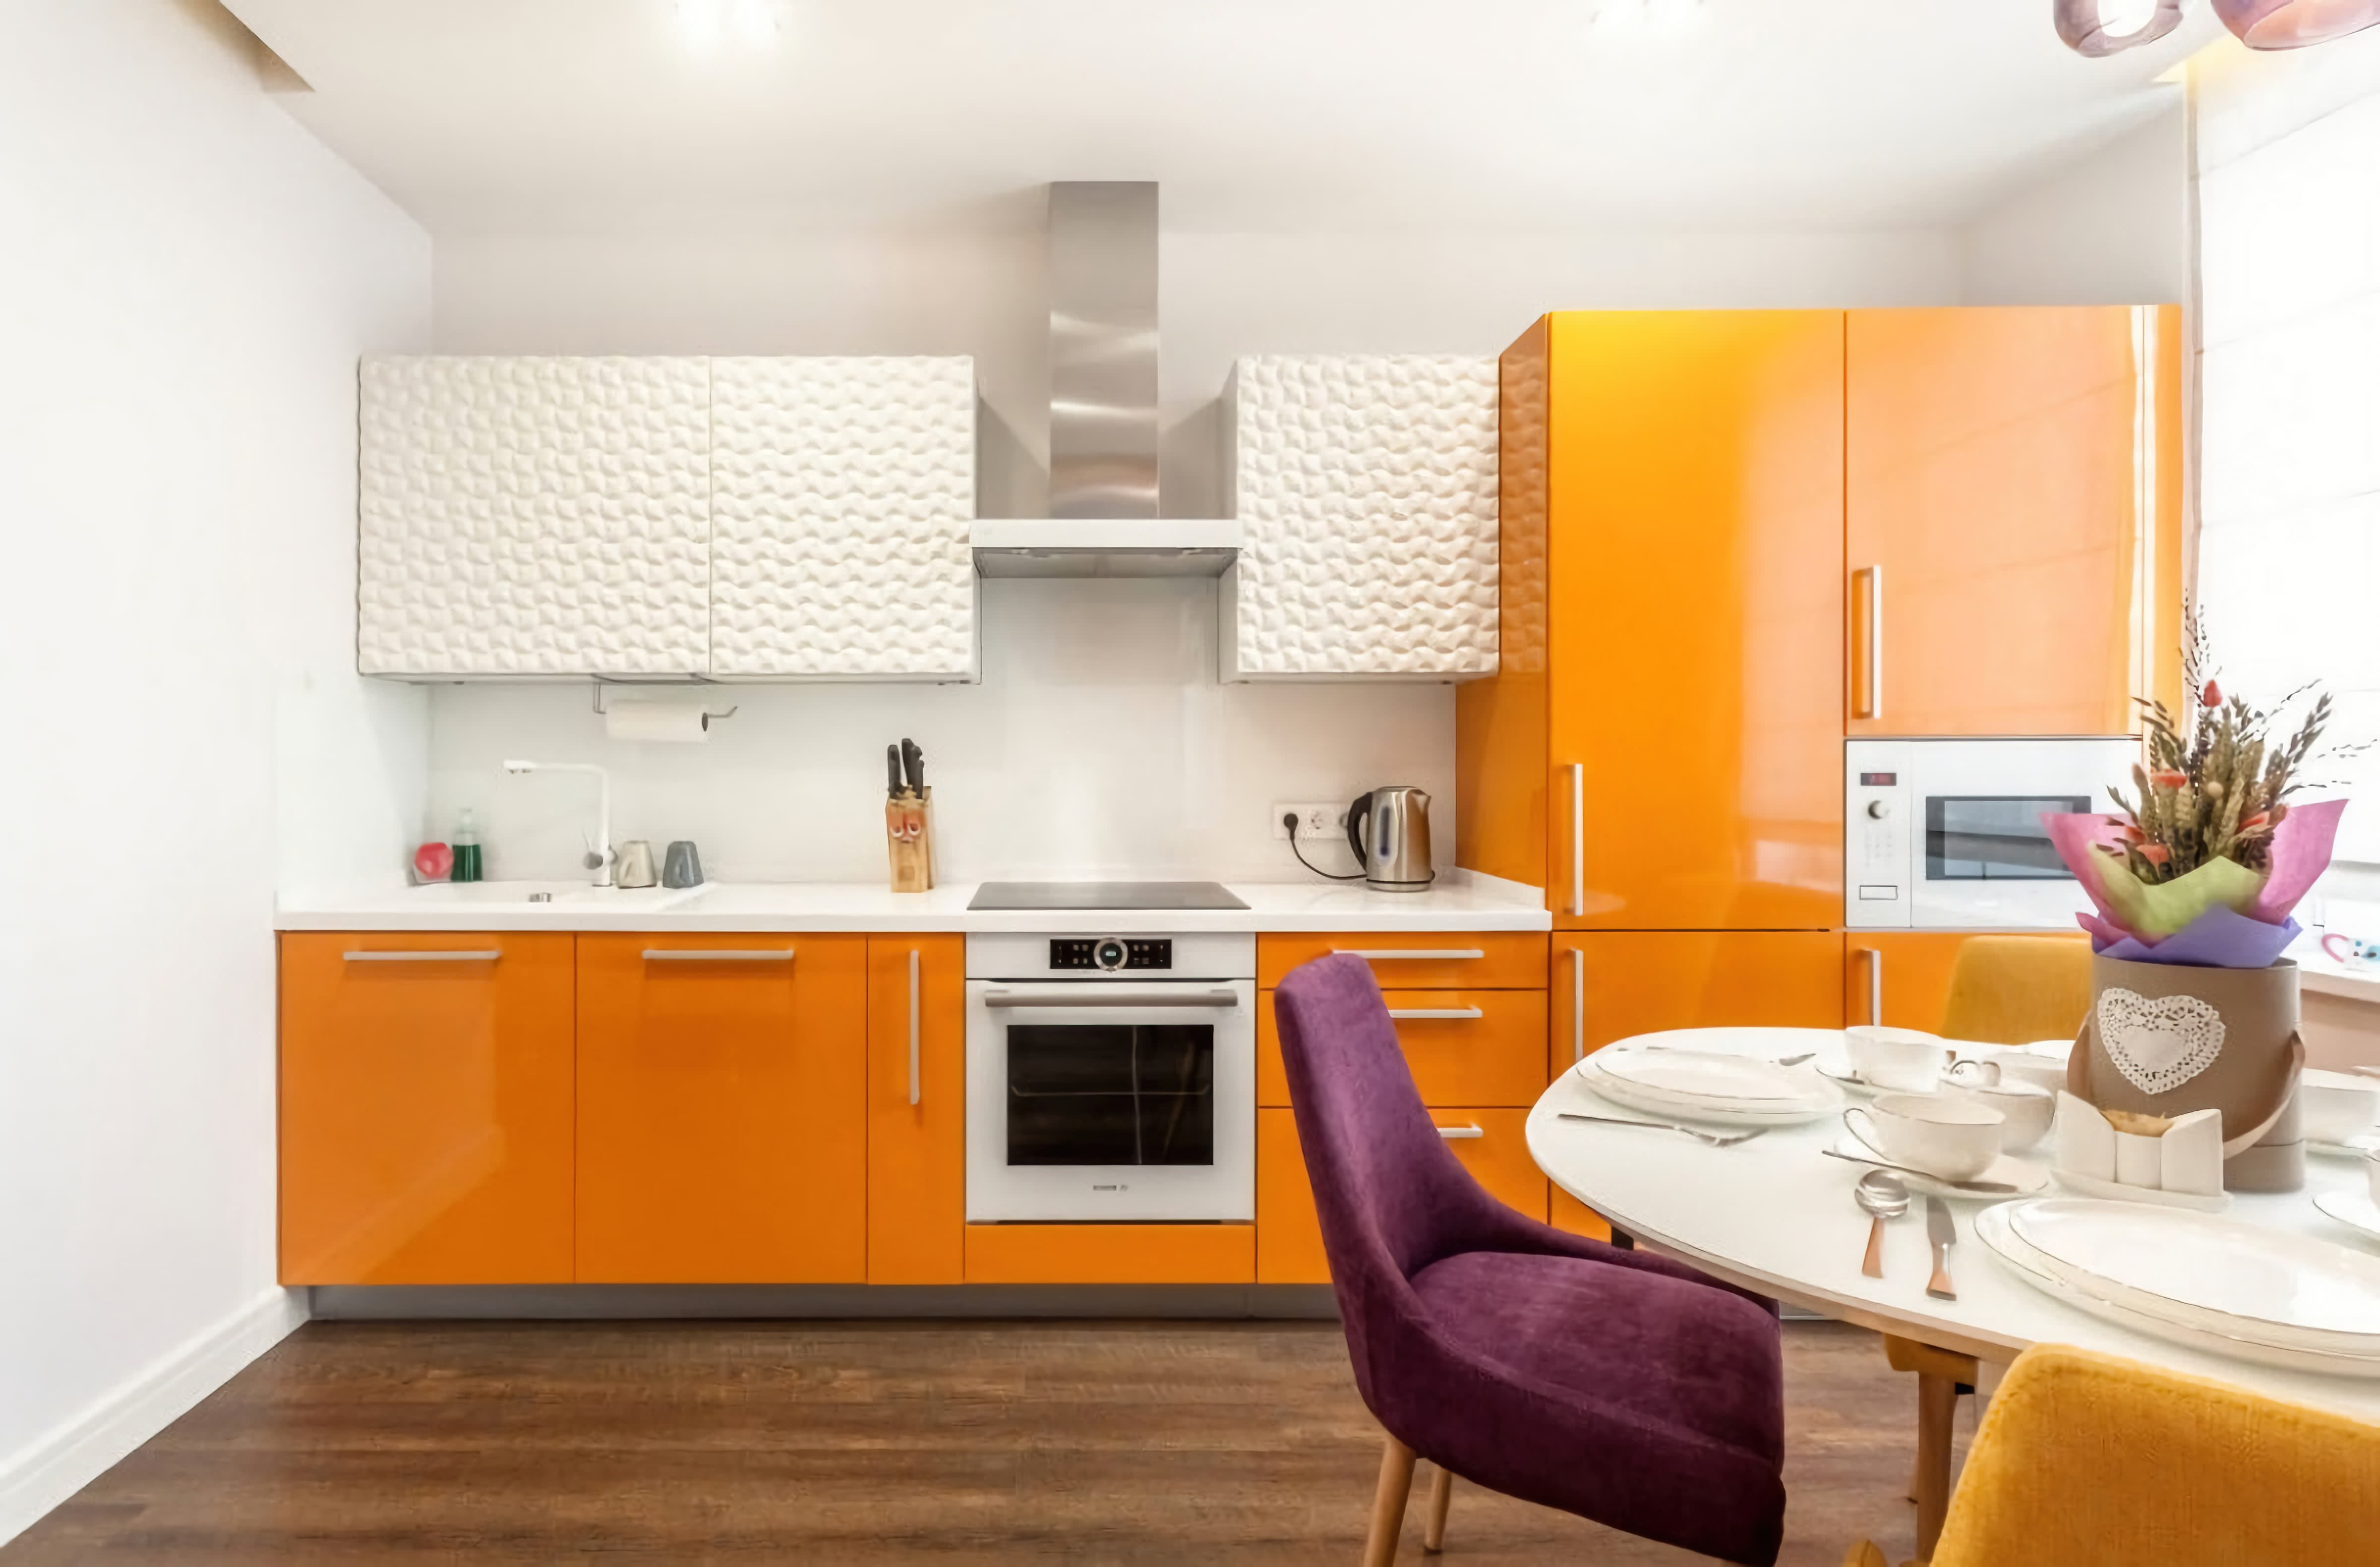 Кухня. Оранжевый кухонный гарнитур, кресла